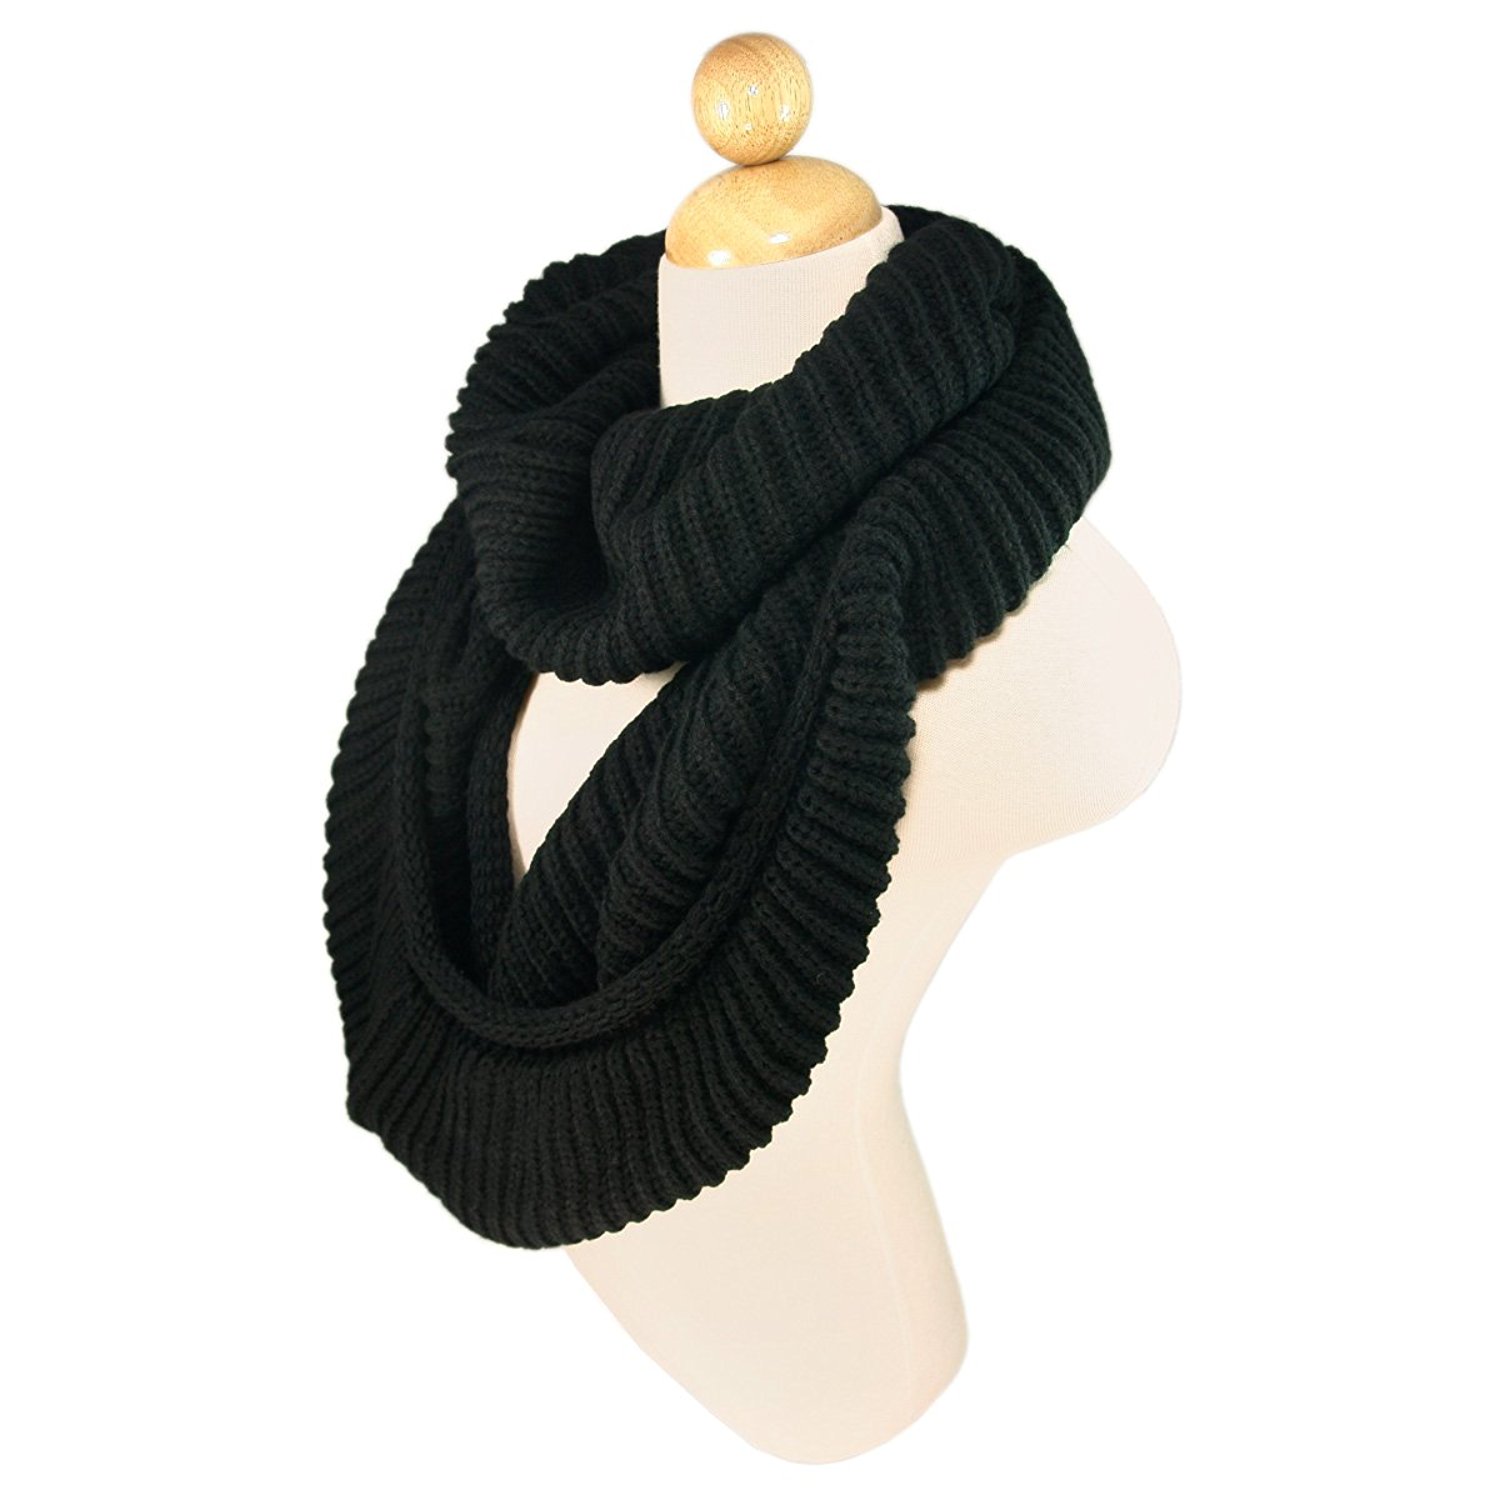 TrendsBlue Premium Winter Knit Warm Infinity Scarf, Black at Amazon ...